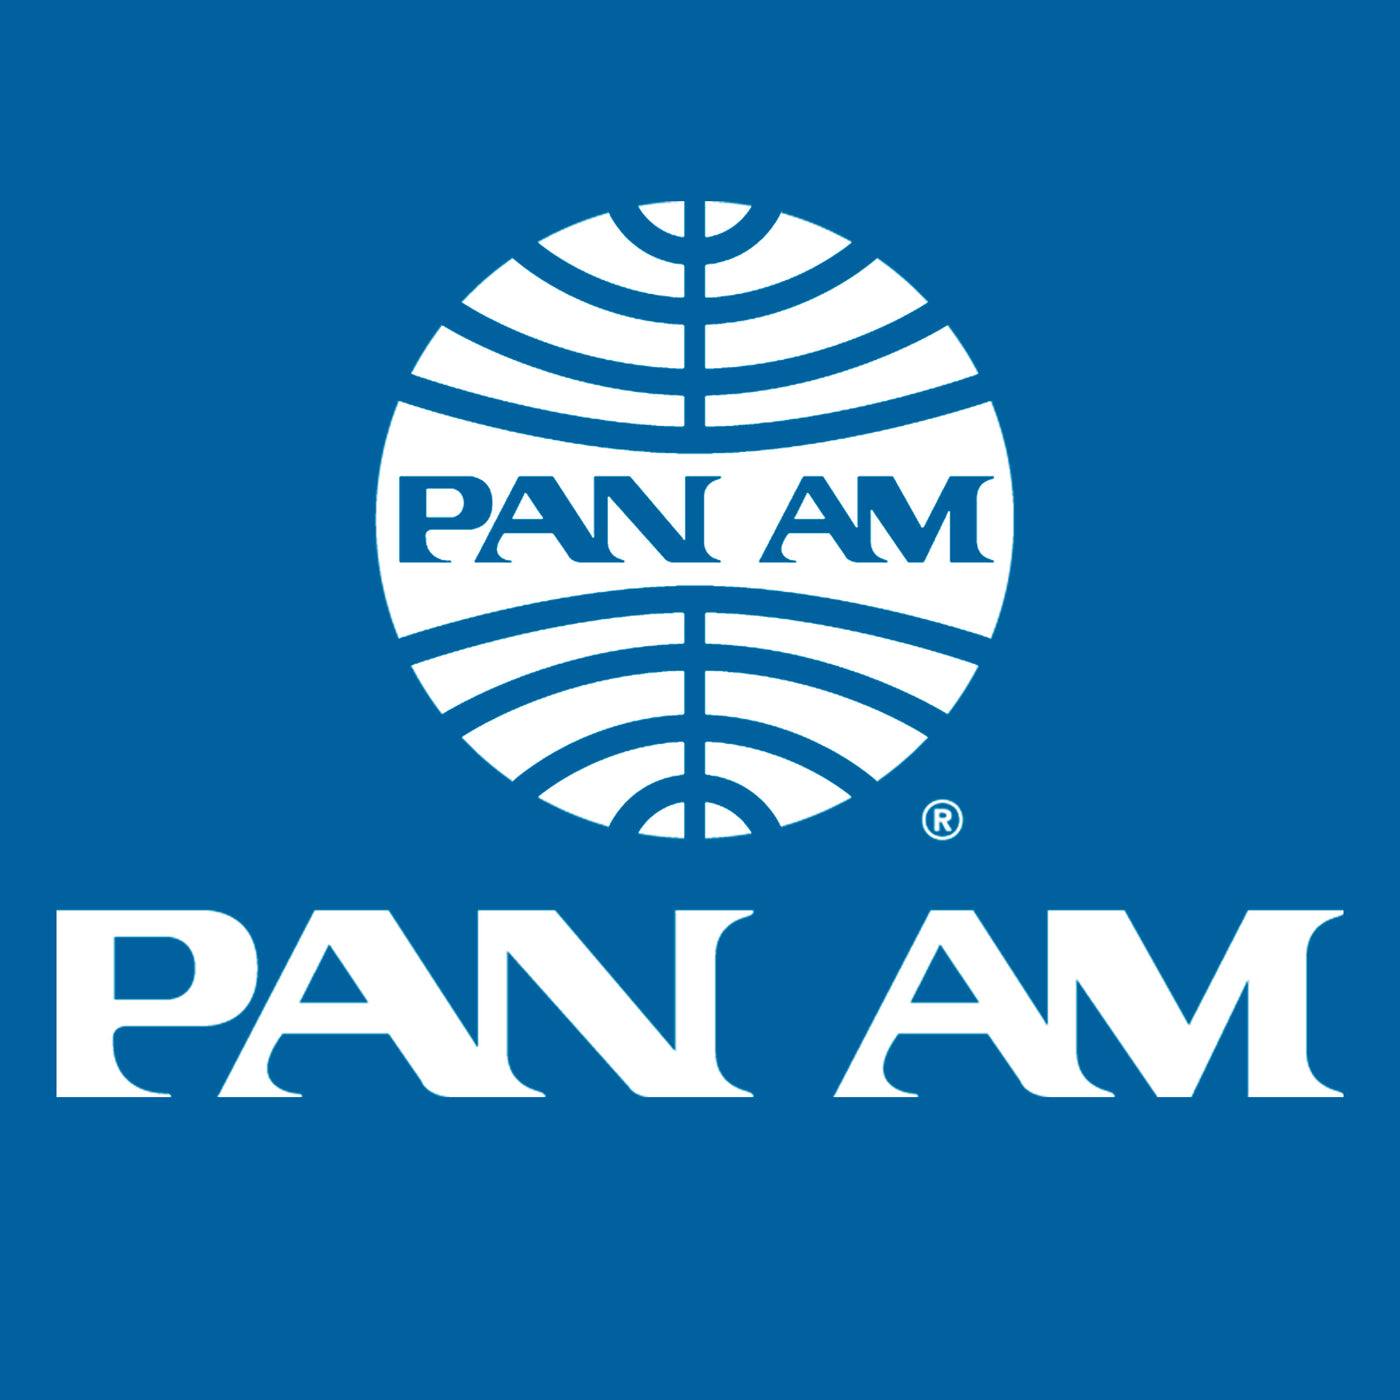 PAN AM - Fem